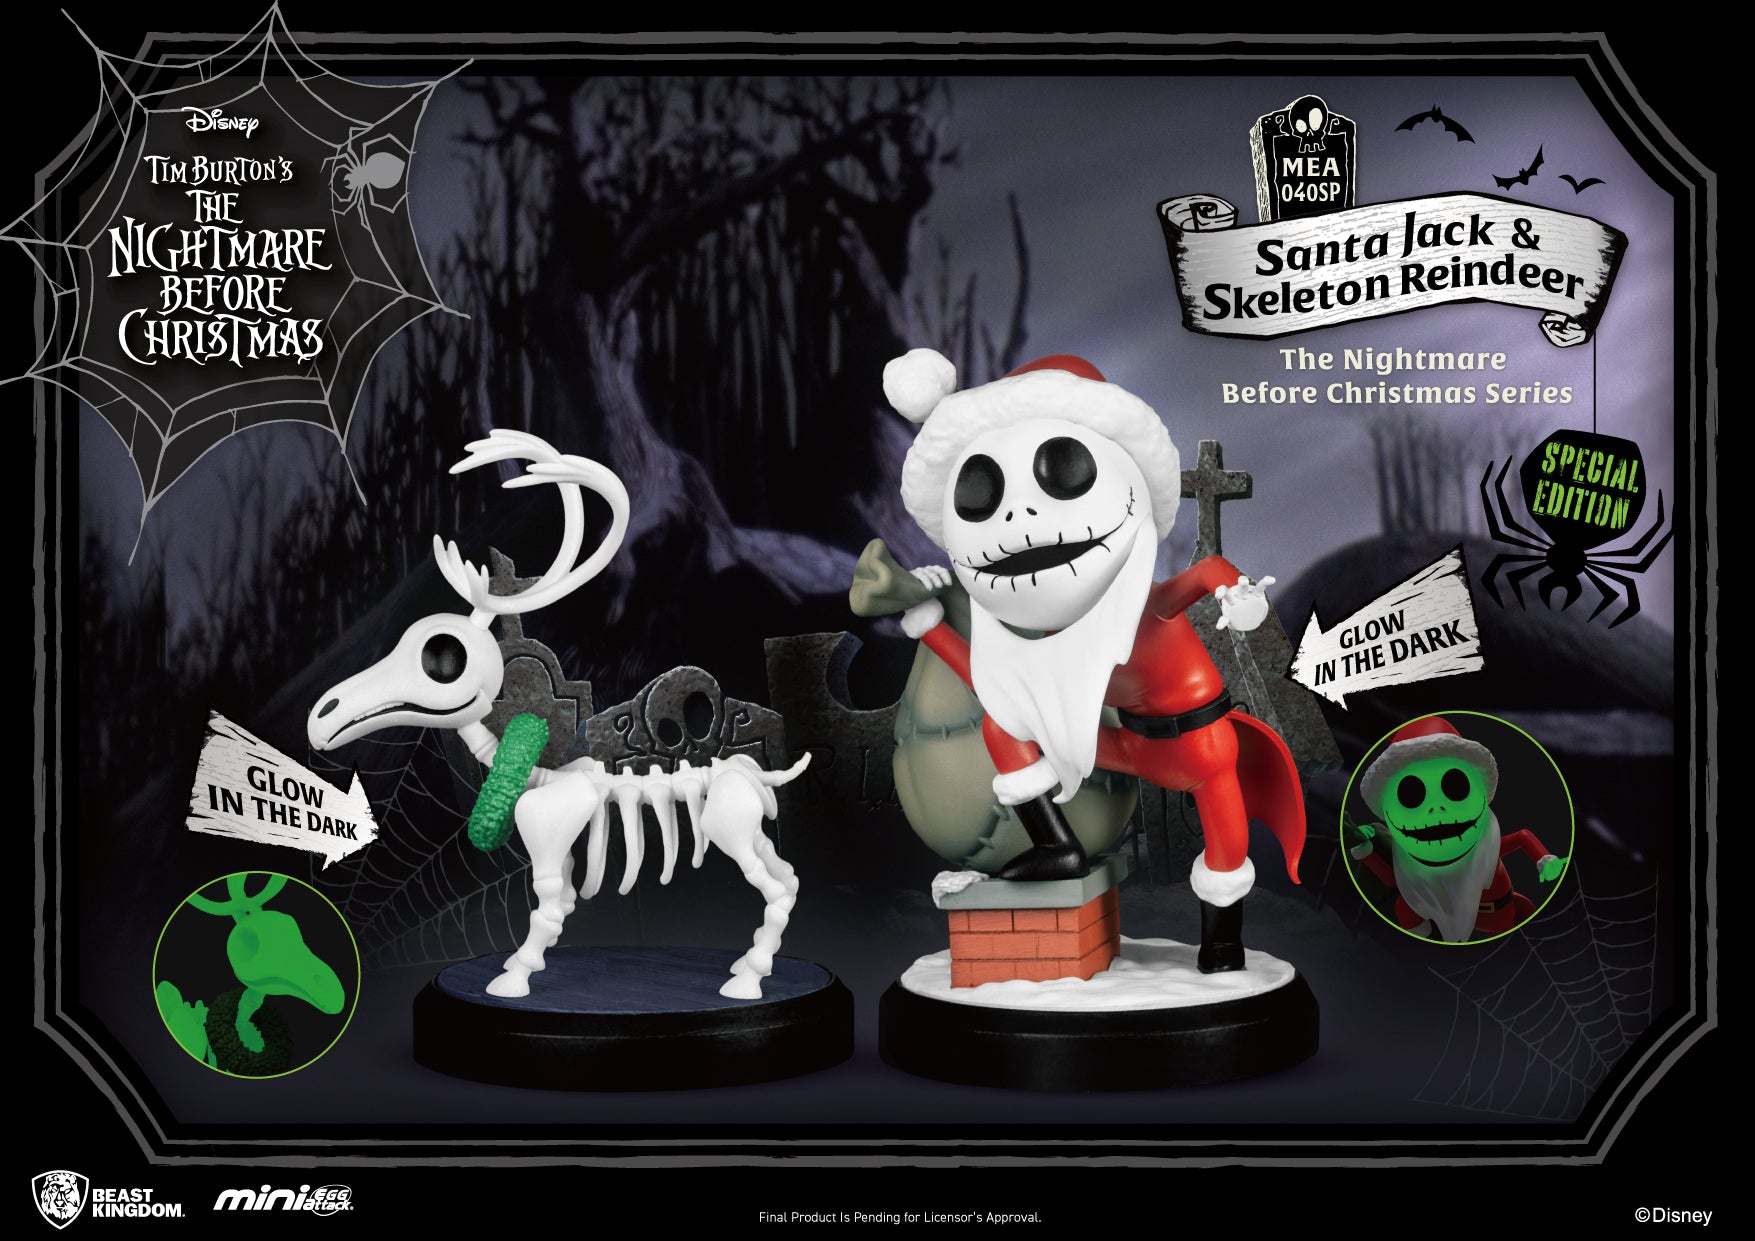 Beast Kingdom MEA-040SP The Nightmare Before Christmas Series Santa jack & Skeleton Reindeer Mini Egg Attack Figure